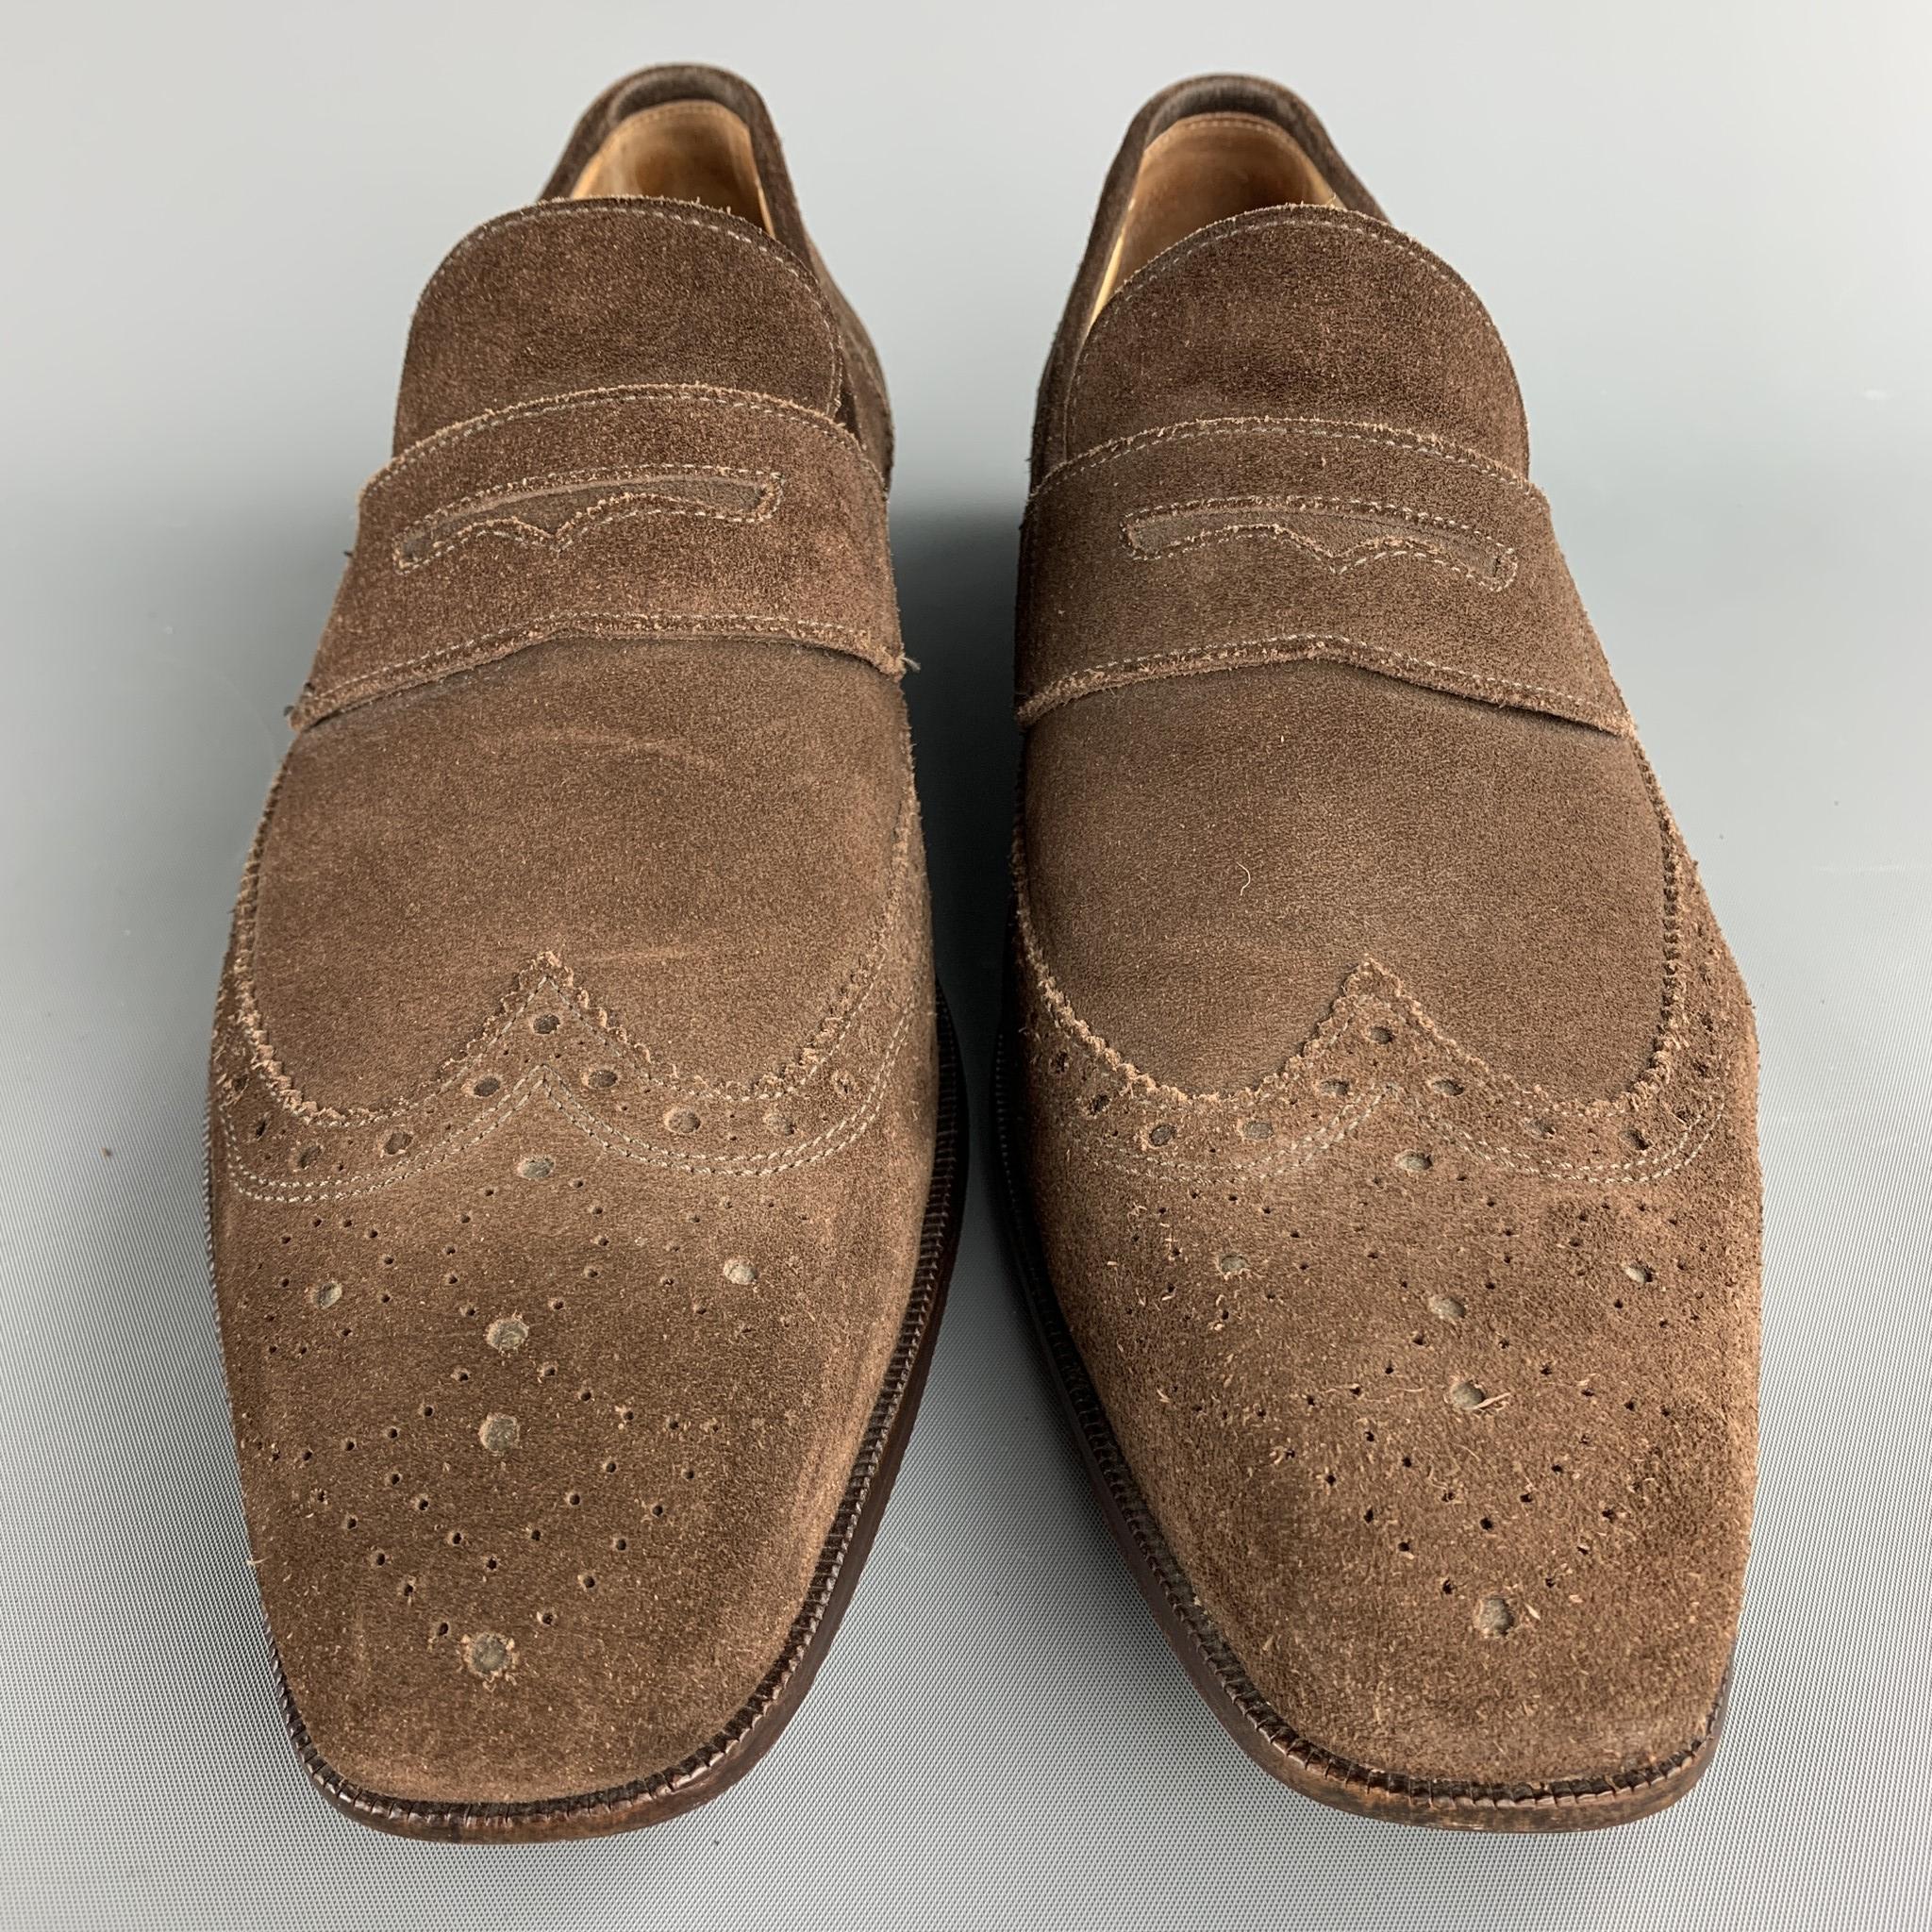 mercanti fiorentini woven penny loafer